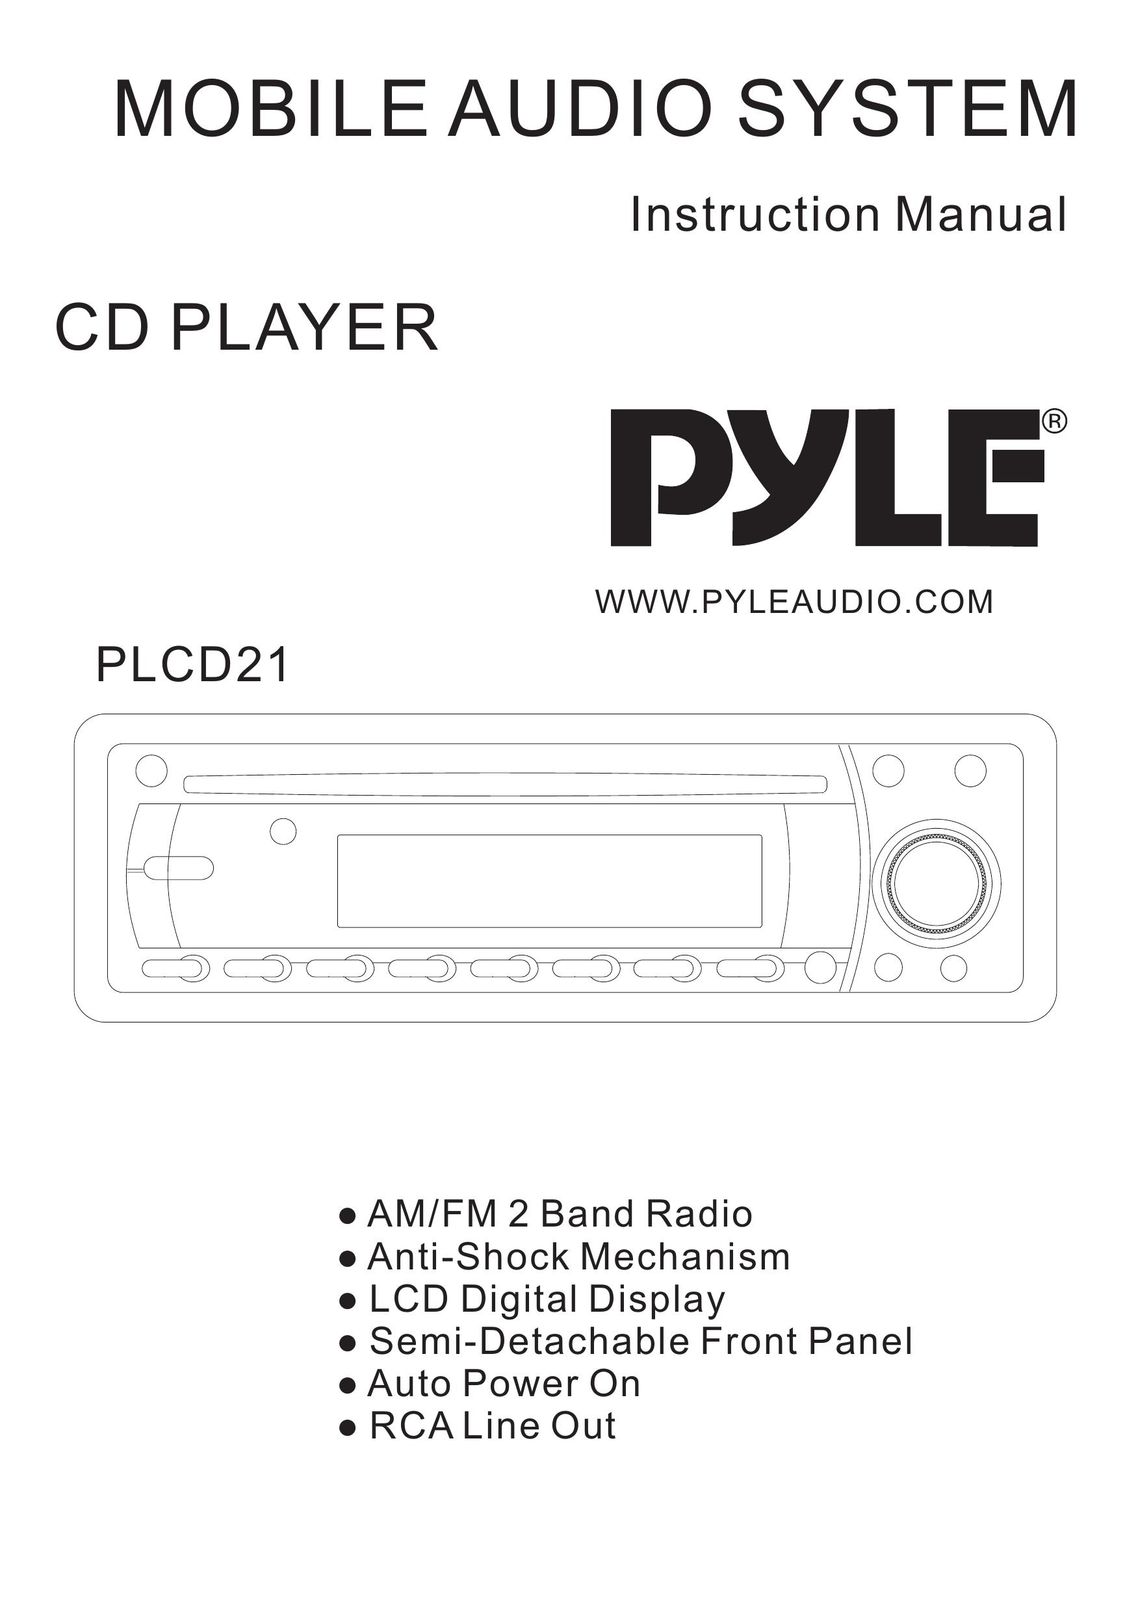 PYLE Audio PLCD21 Car Stereo System User Manual